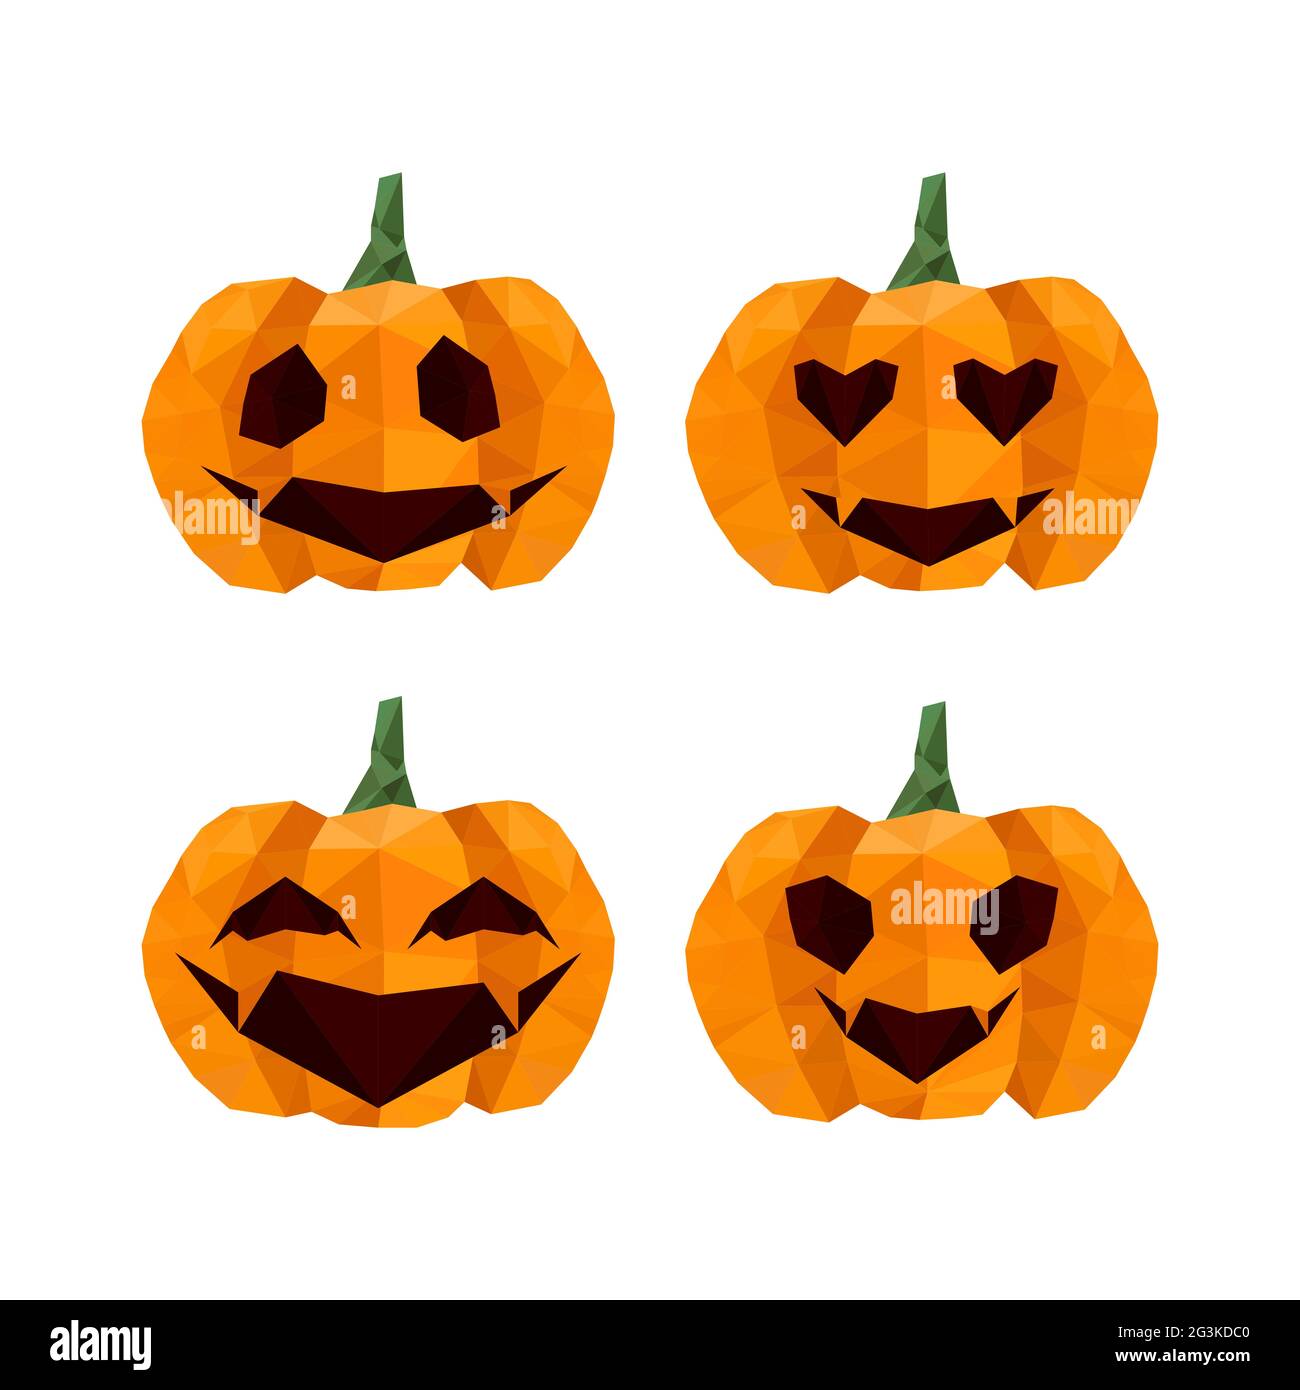 Illustration of funny halloween, origami pumpkins emoticons Stock Photo